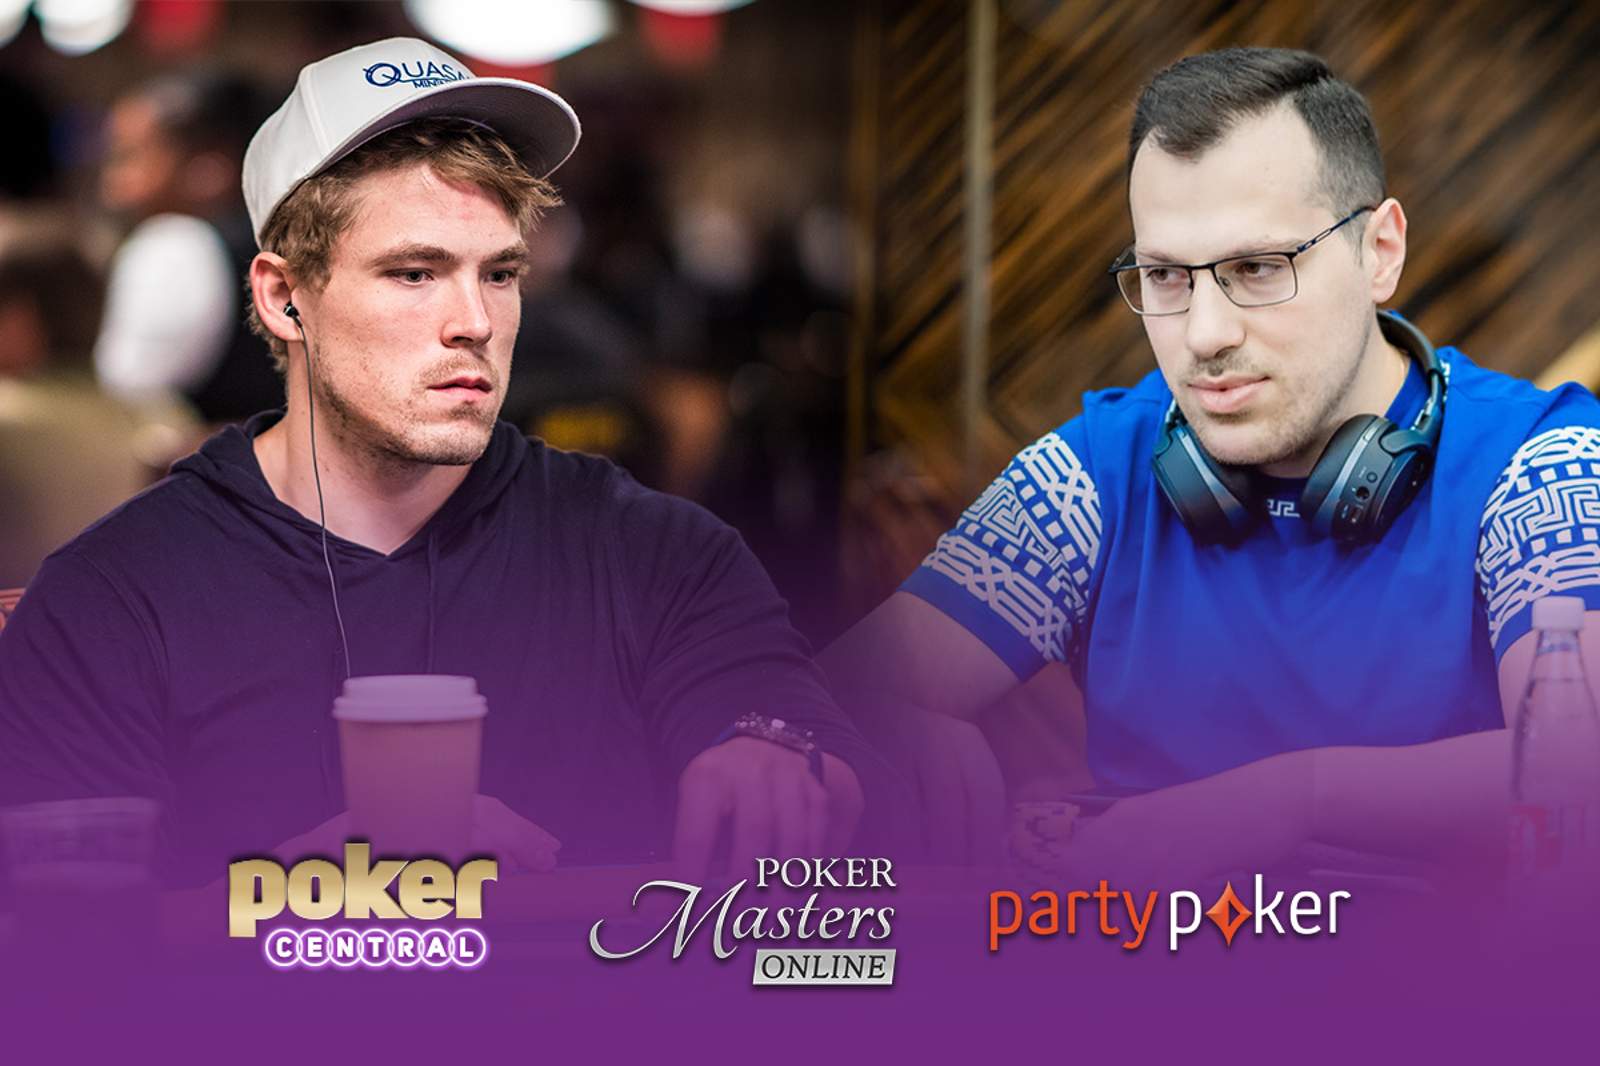 Poker Masters Online - Martirosian & Foxen Top Contenders for Purple Jacket